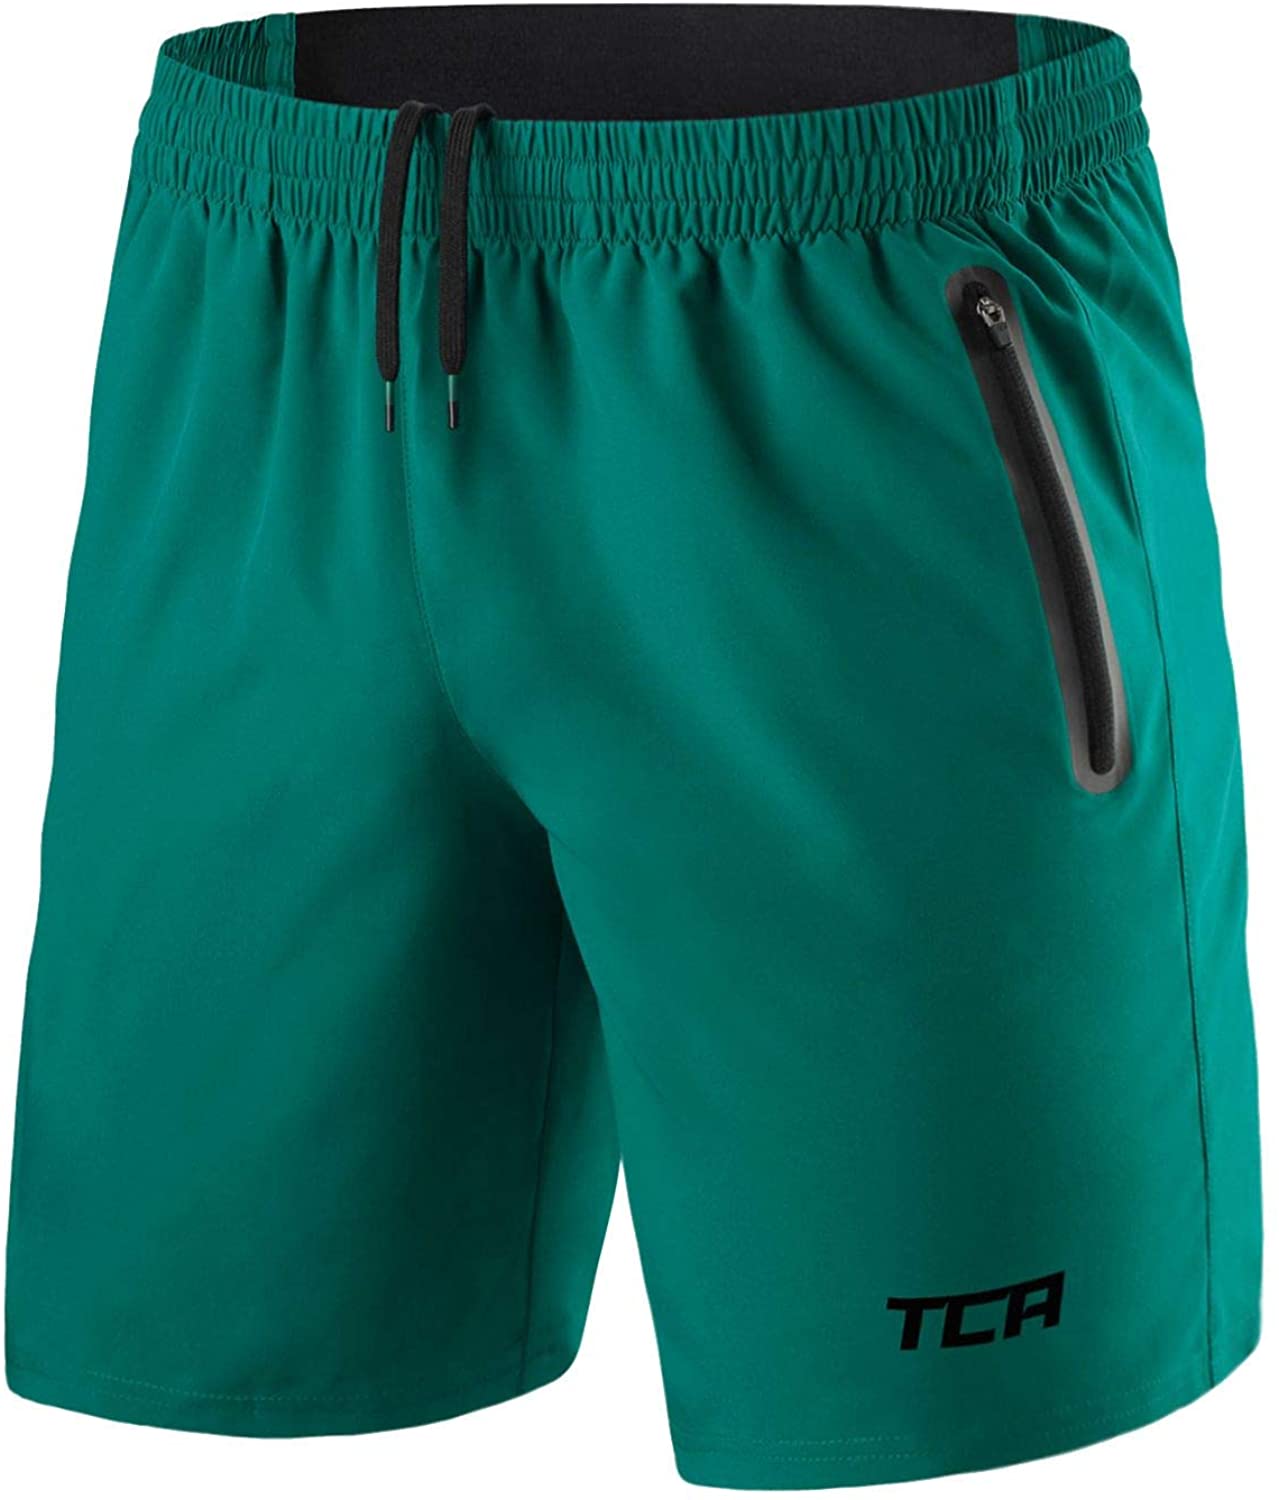 Running Shorts Compression/Zip Pockets TCA Mens' & Boys' Gym Training Fitness 